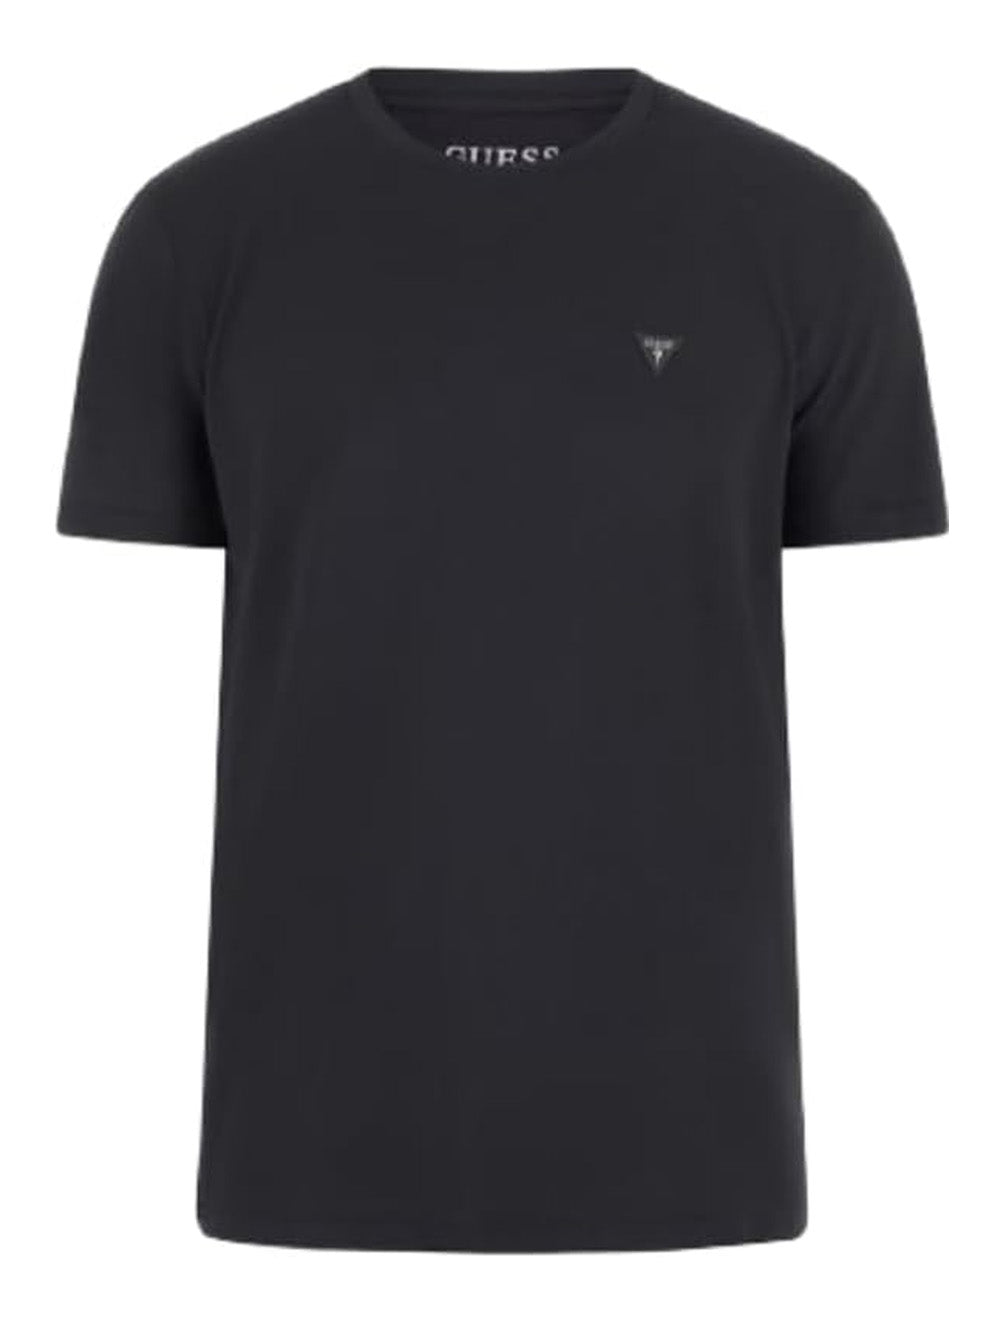 GUESS T-shirt Uomo - Nero modello M3YI45KBS60